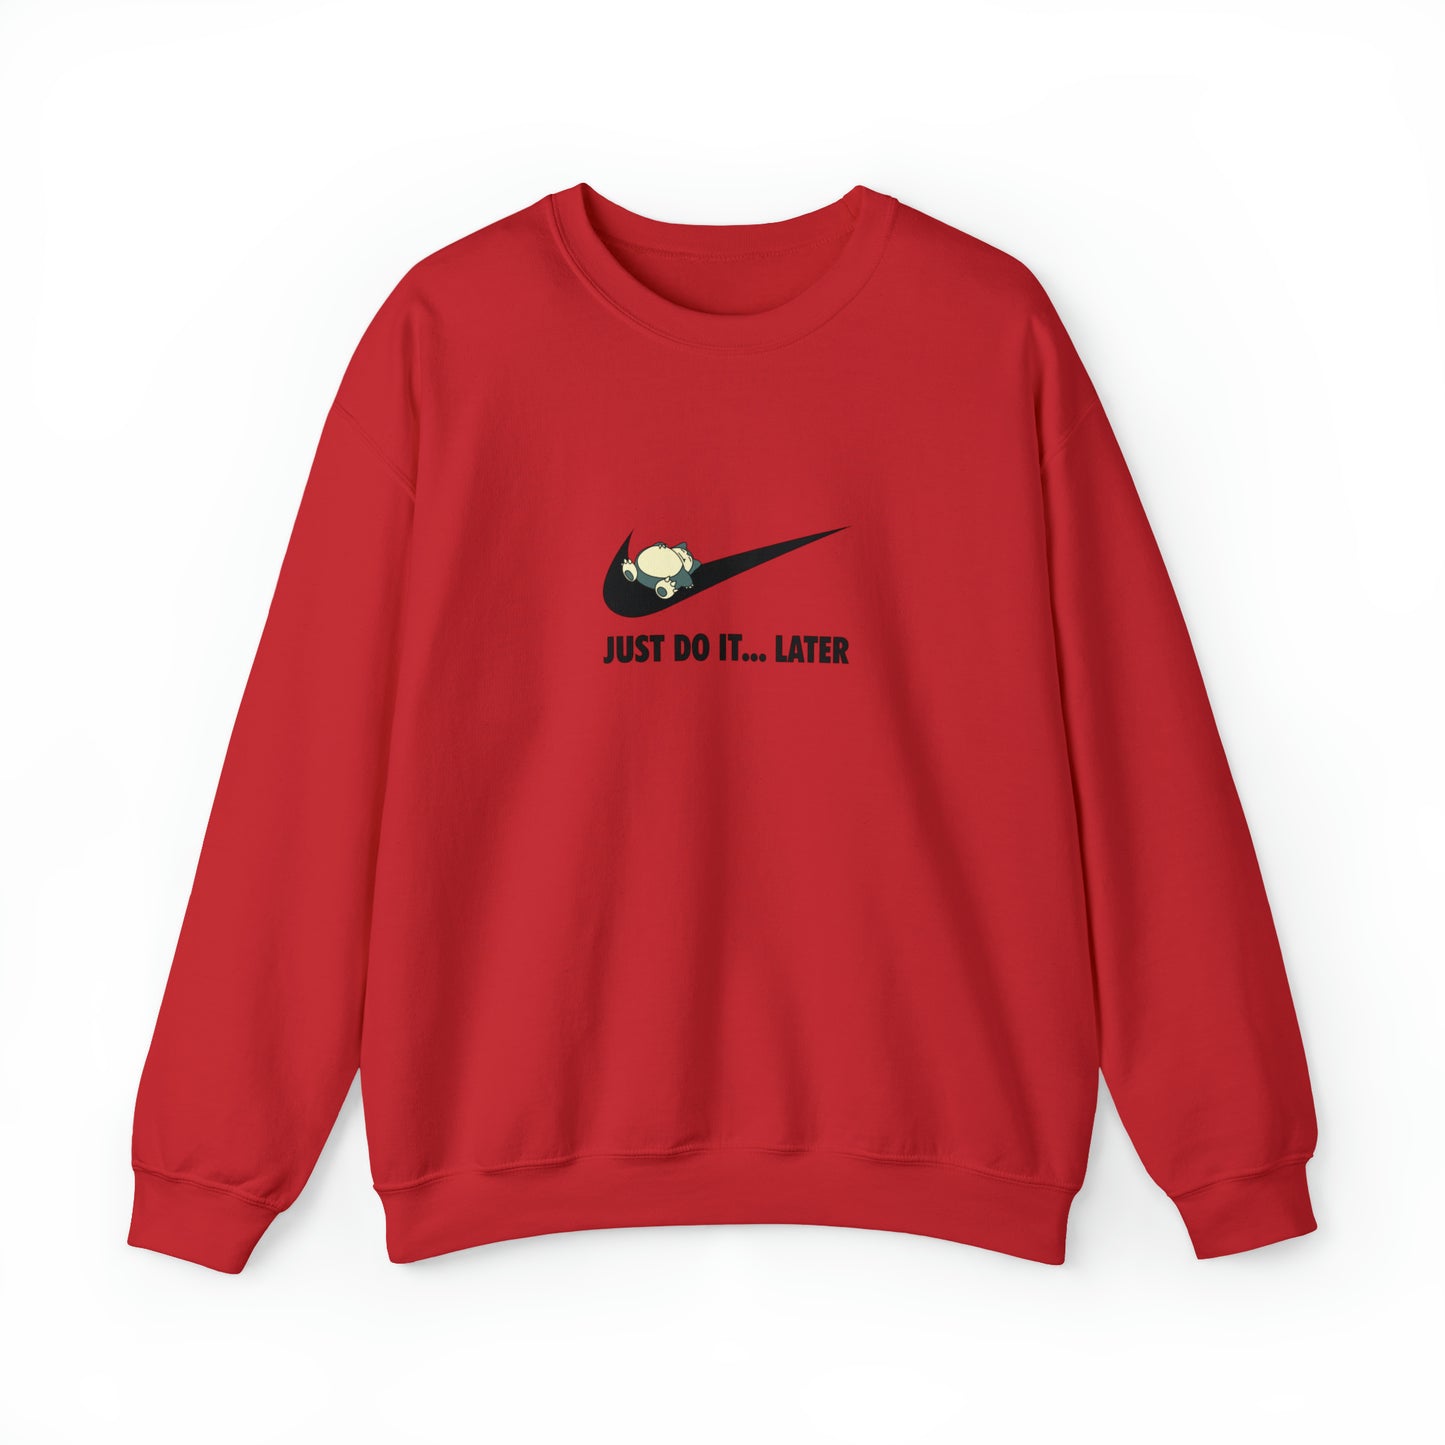 Custom Parody Crewneck Sweatshirt, Just do it later Nike Design